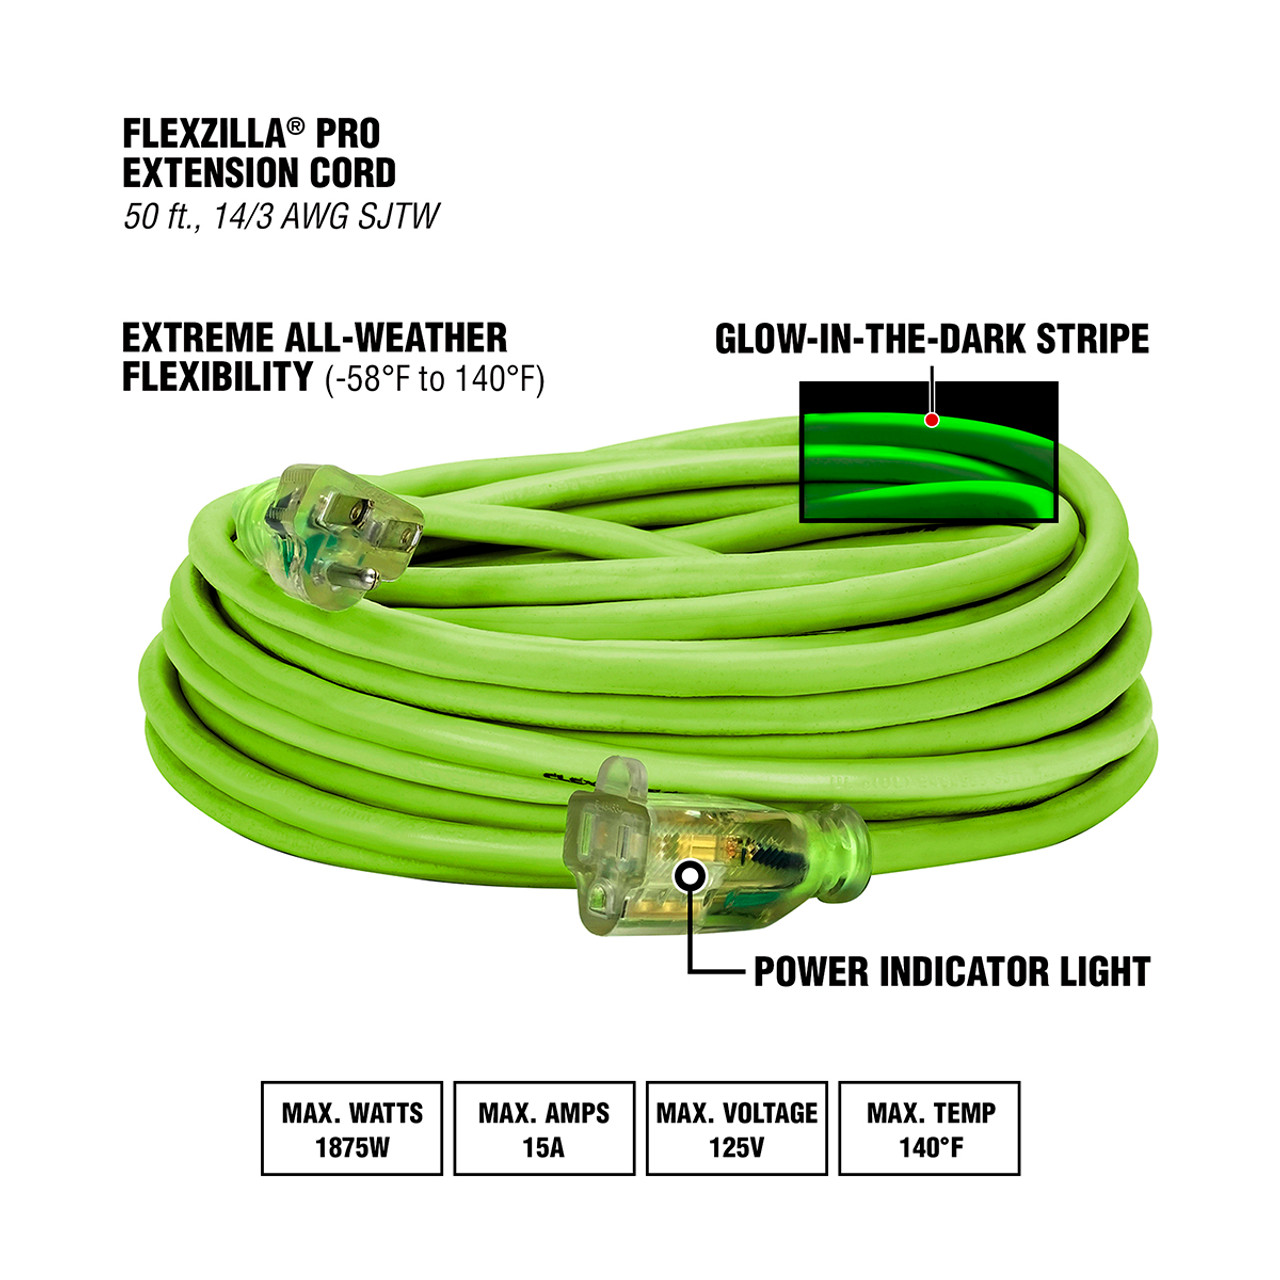 Flexzilla FZ512730 Pro Extension Cord, 14/3 AWG SJTW, 50 ft